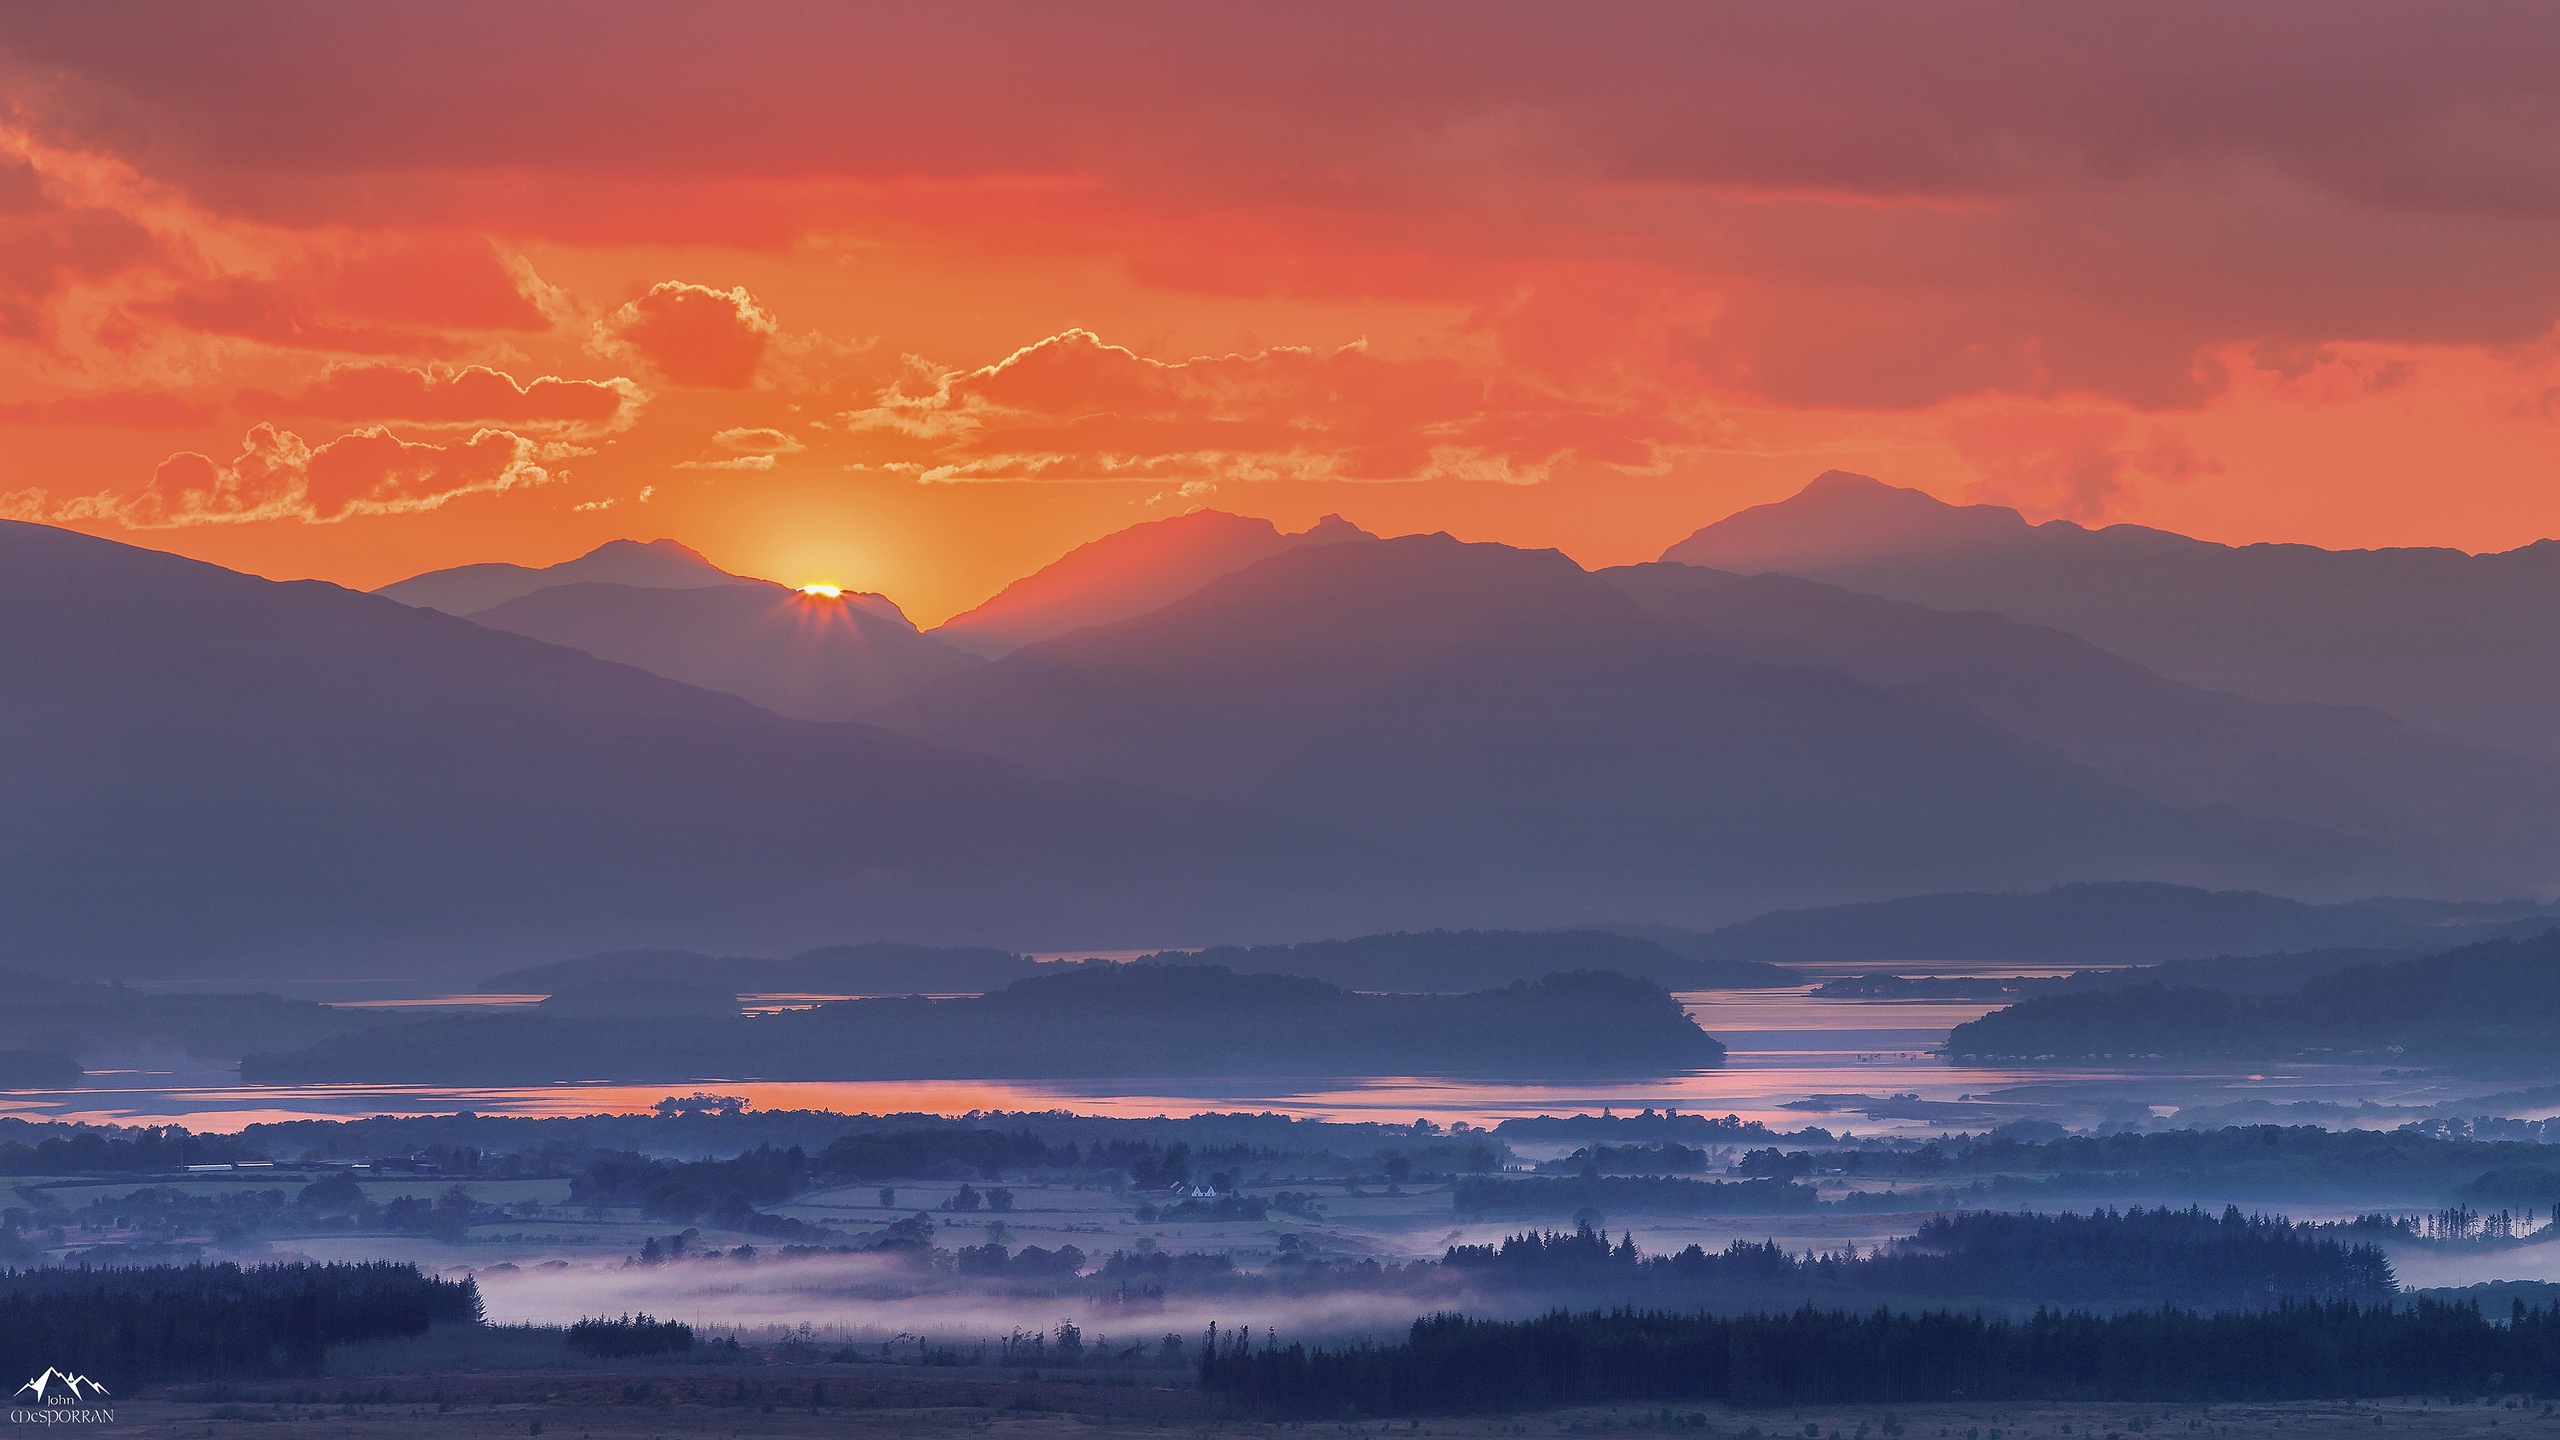 Download wallpaper 2560x1440 mountains, fog, sunset, loch